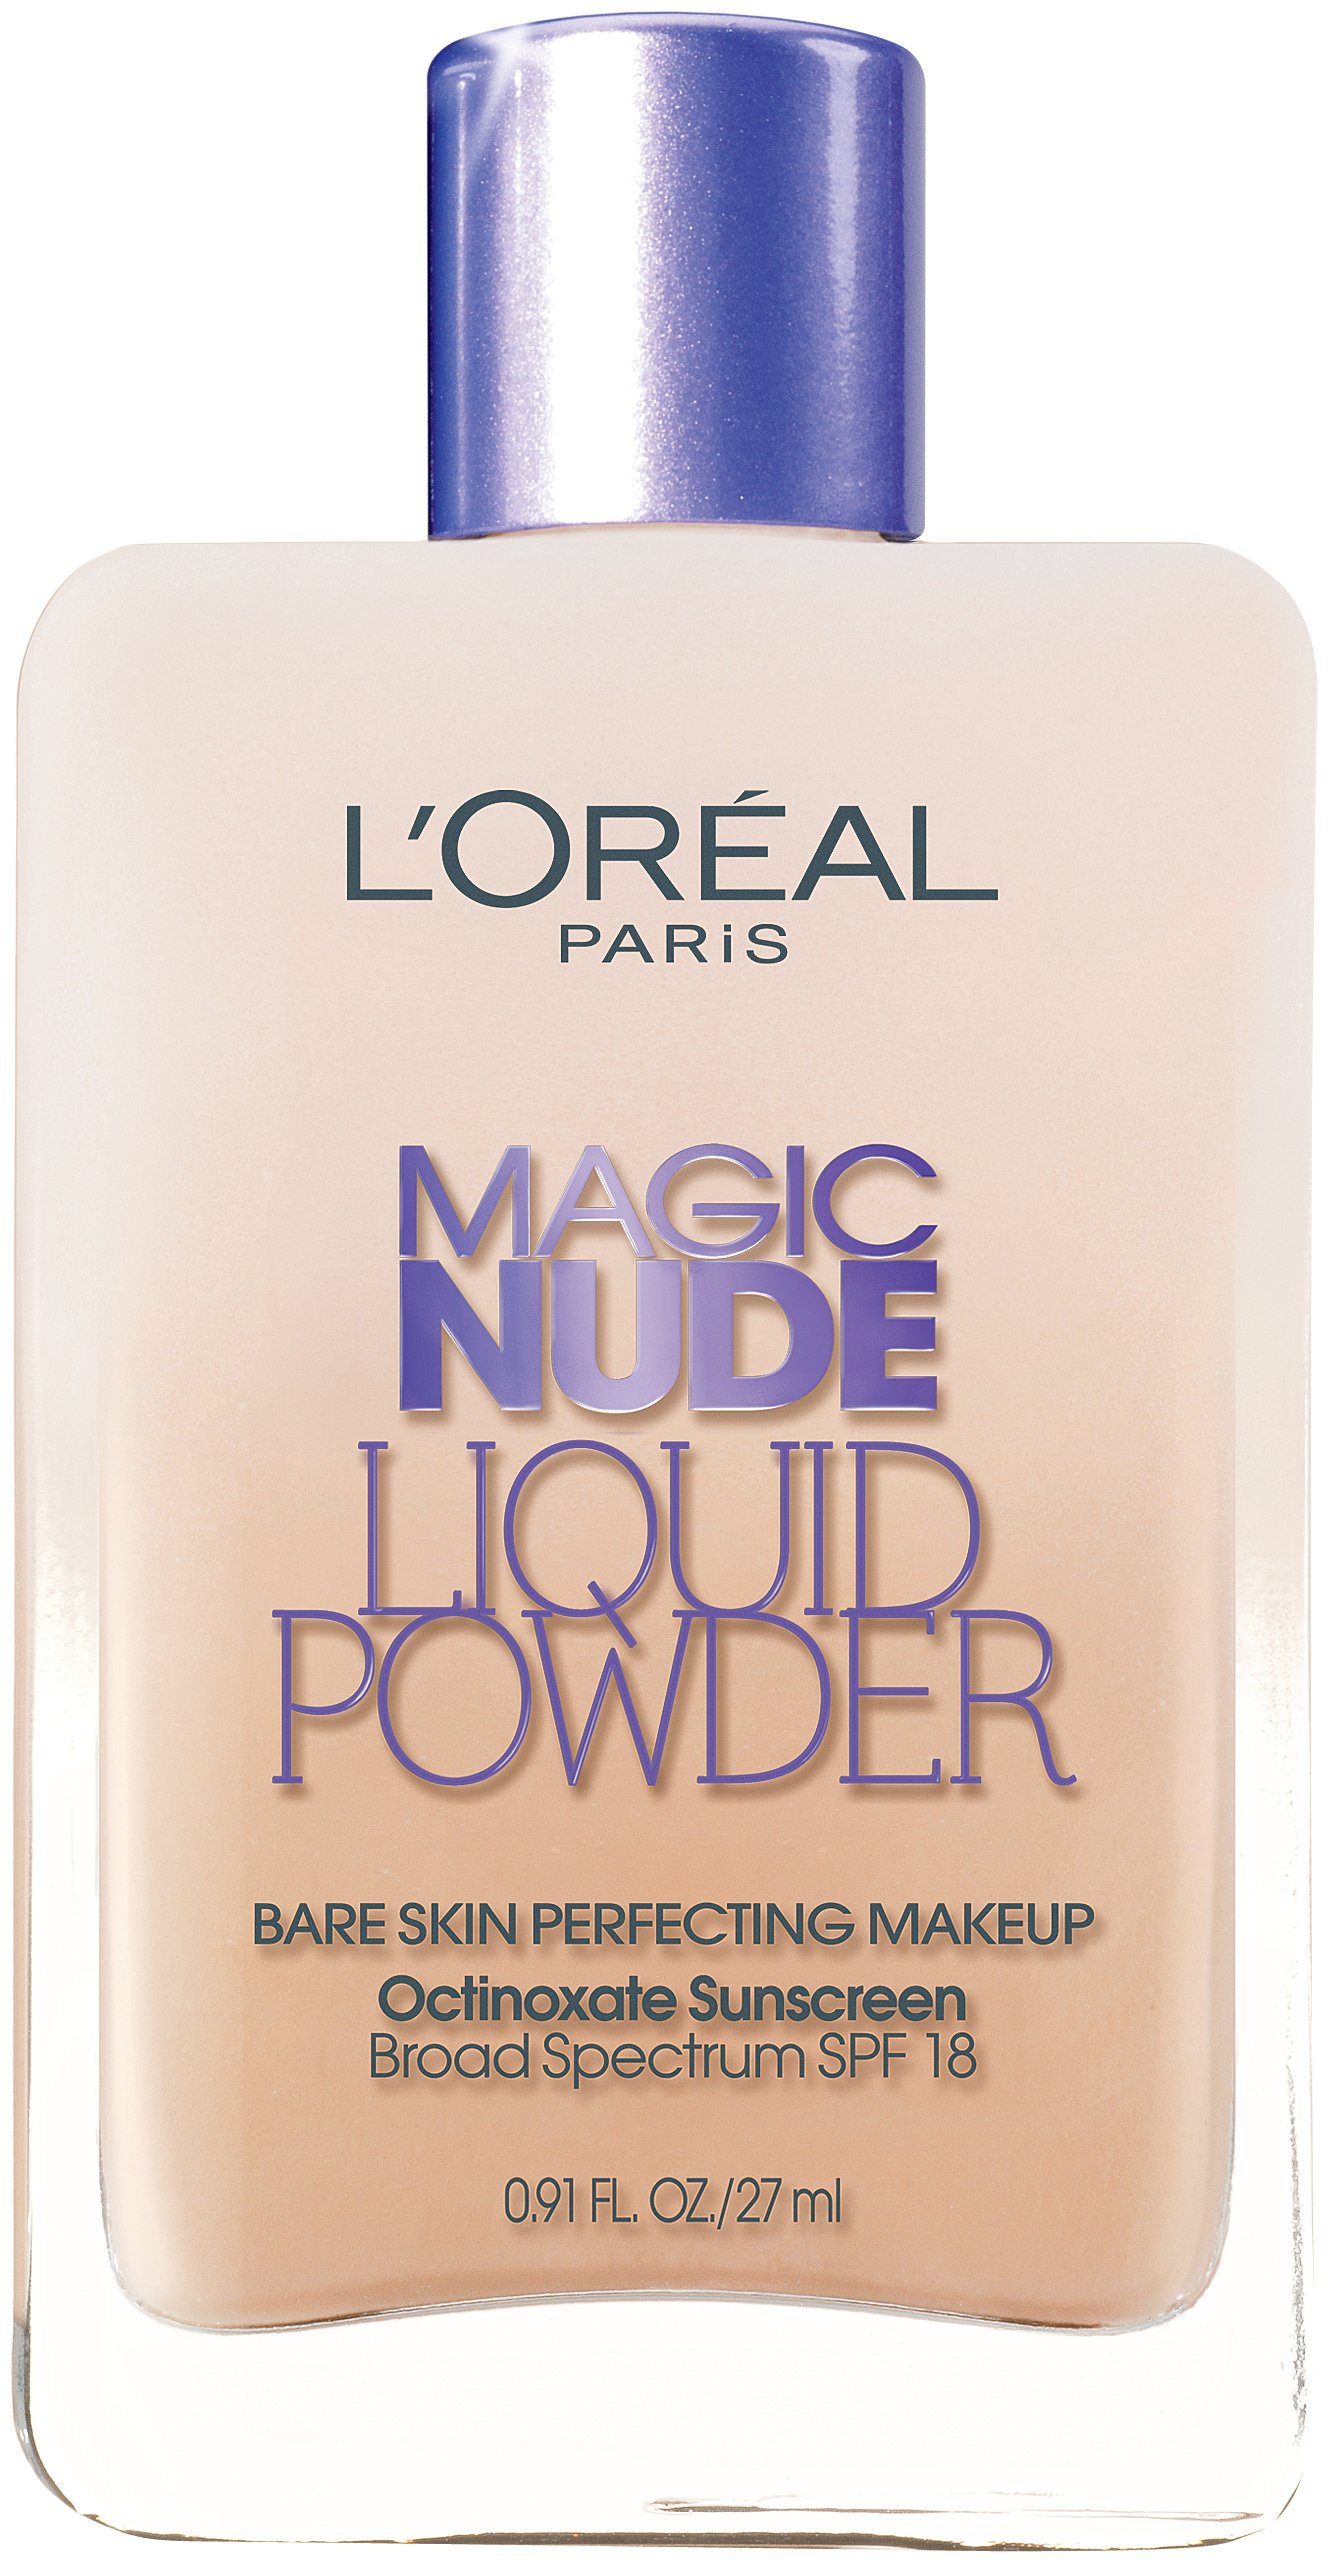 LOreal Paris Magic Nude Liquid Powder Perfecting Makeup 